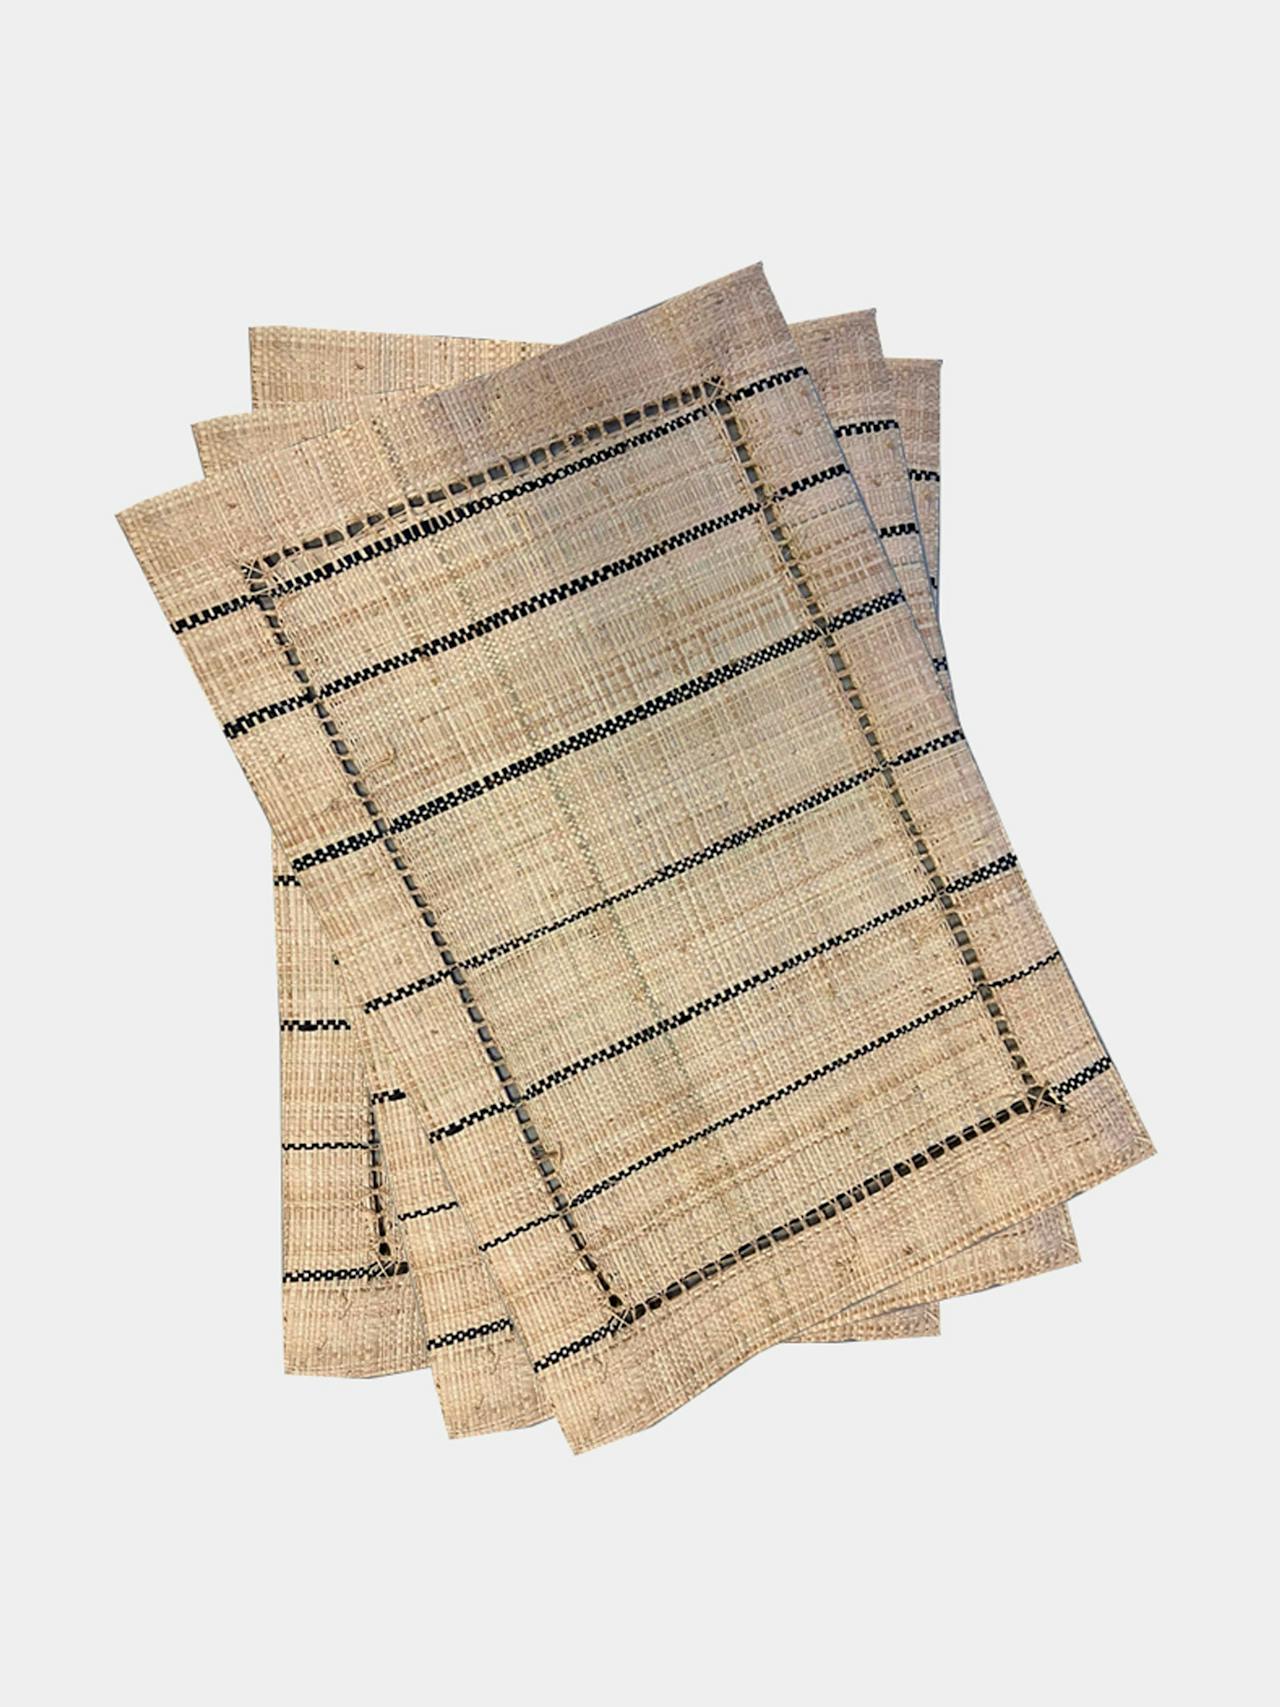 Stripe raffia placemats, set of 6